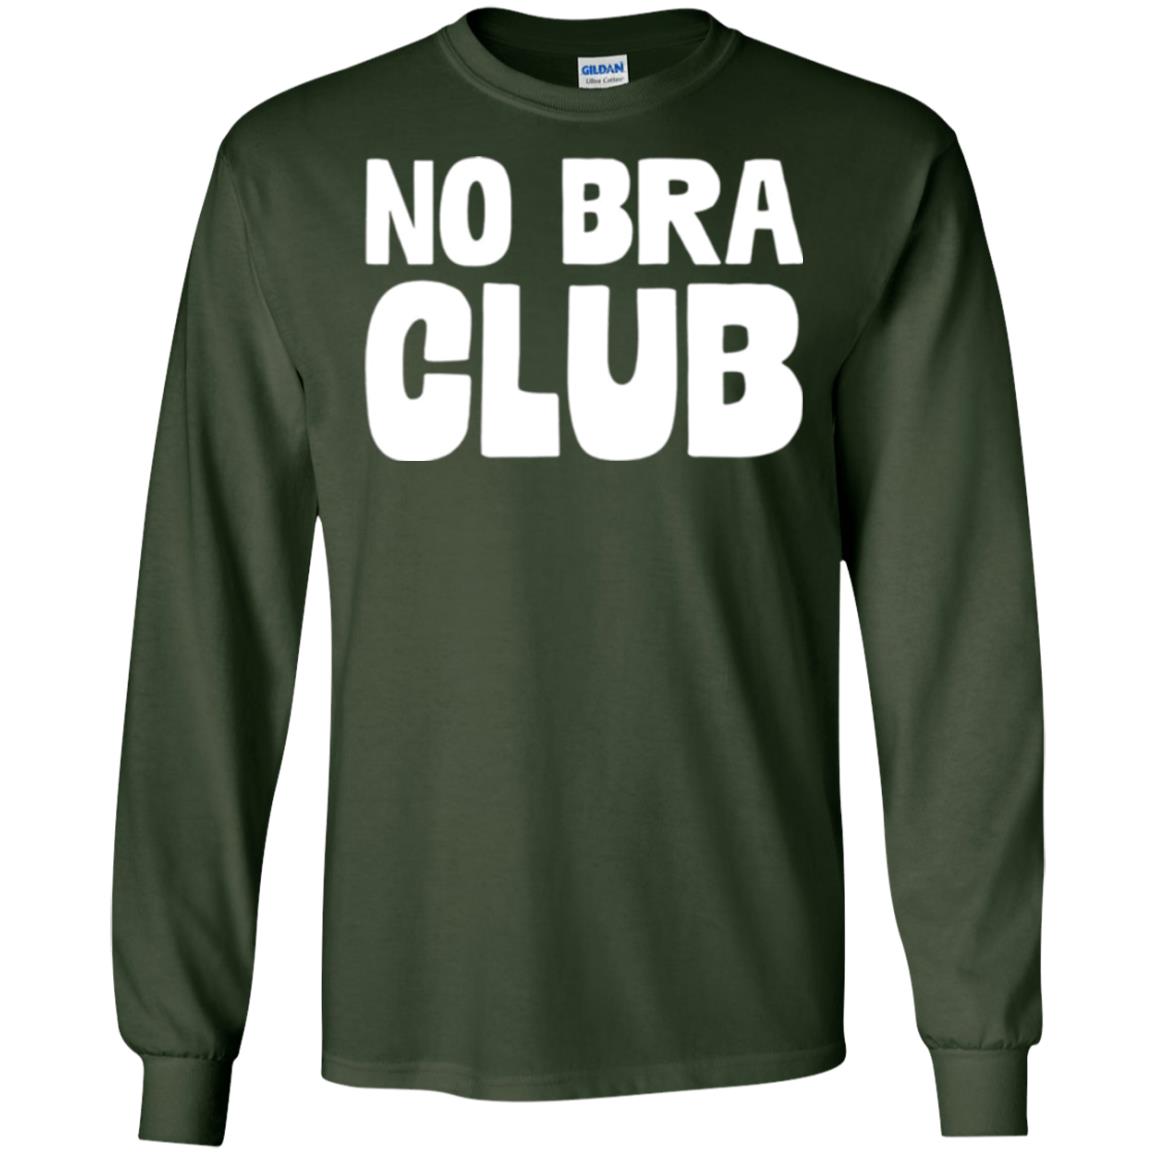 No bra club Essential T-Shirt for Sale by DuaneGarrett